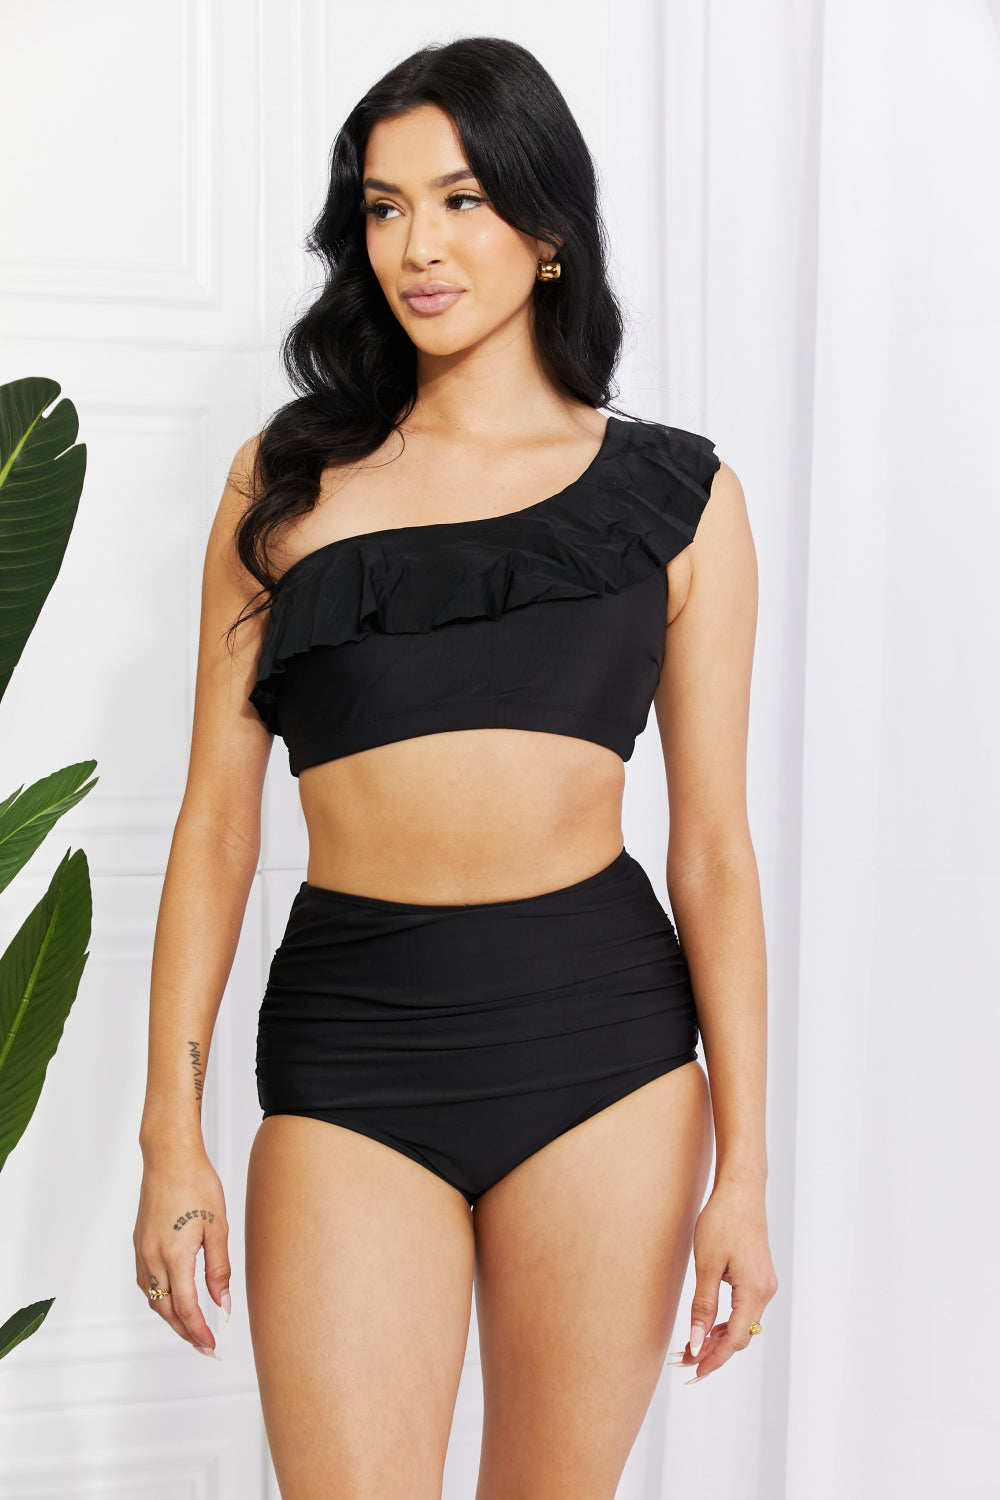 Marina West Swim Seaside Romance Ruffle One-Shoulder Bikini in Black - Online Only